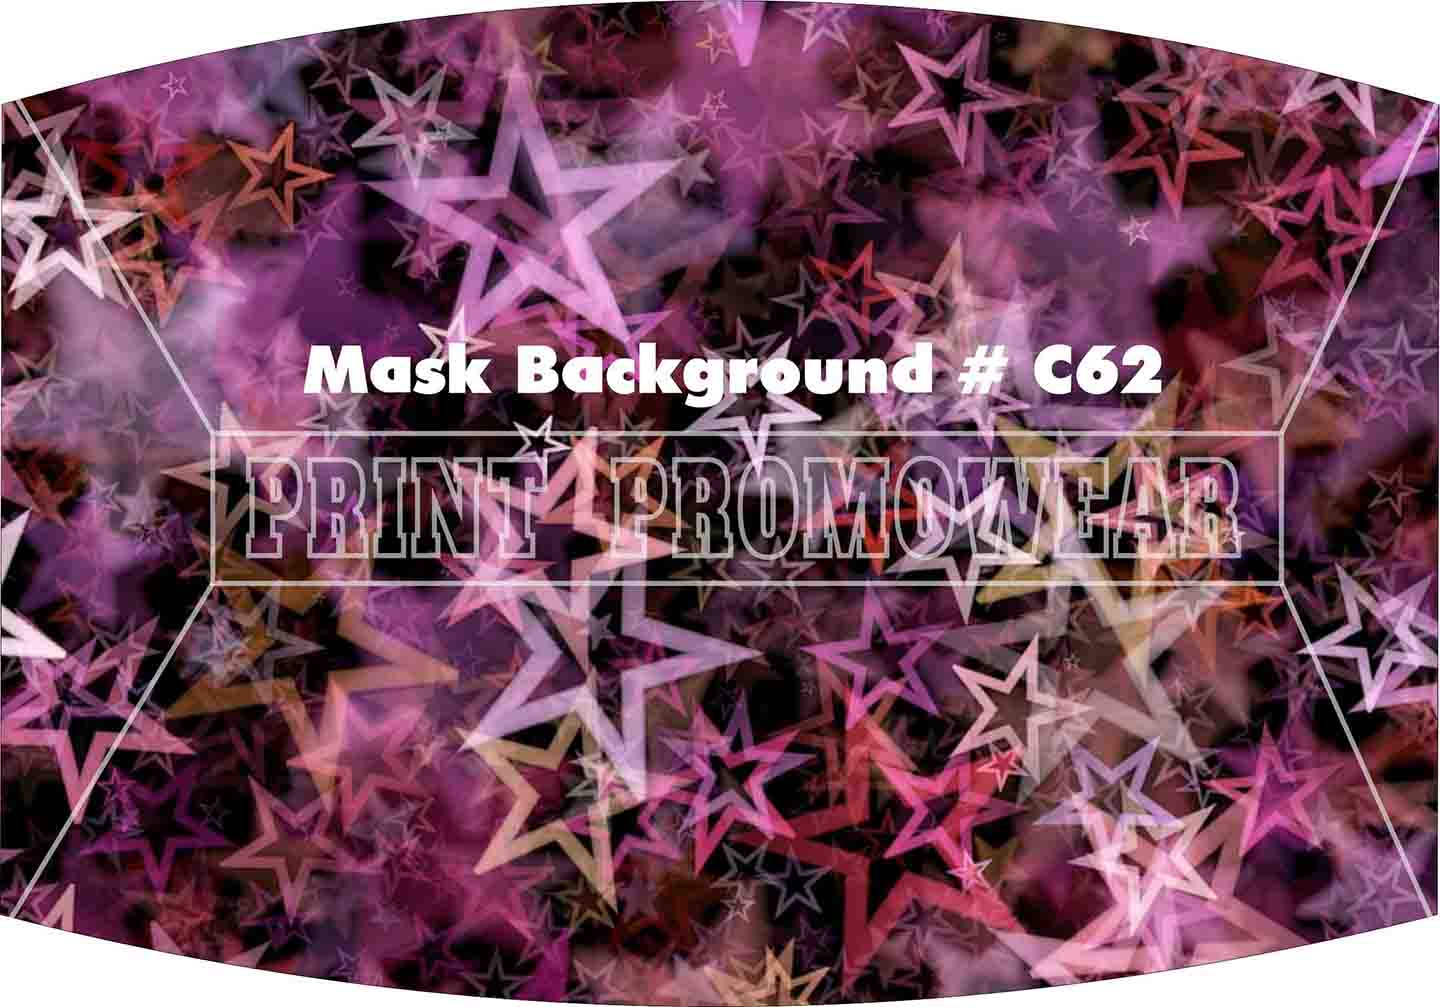 Image/MaskBackground/c62.jpg